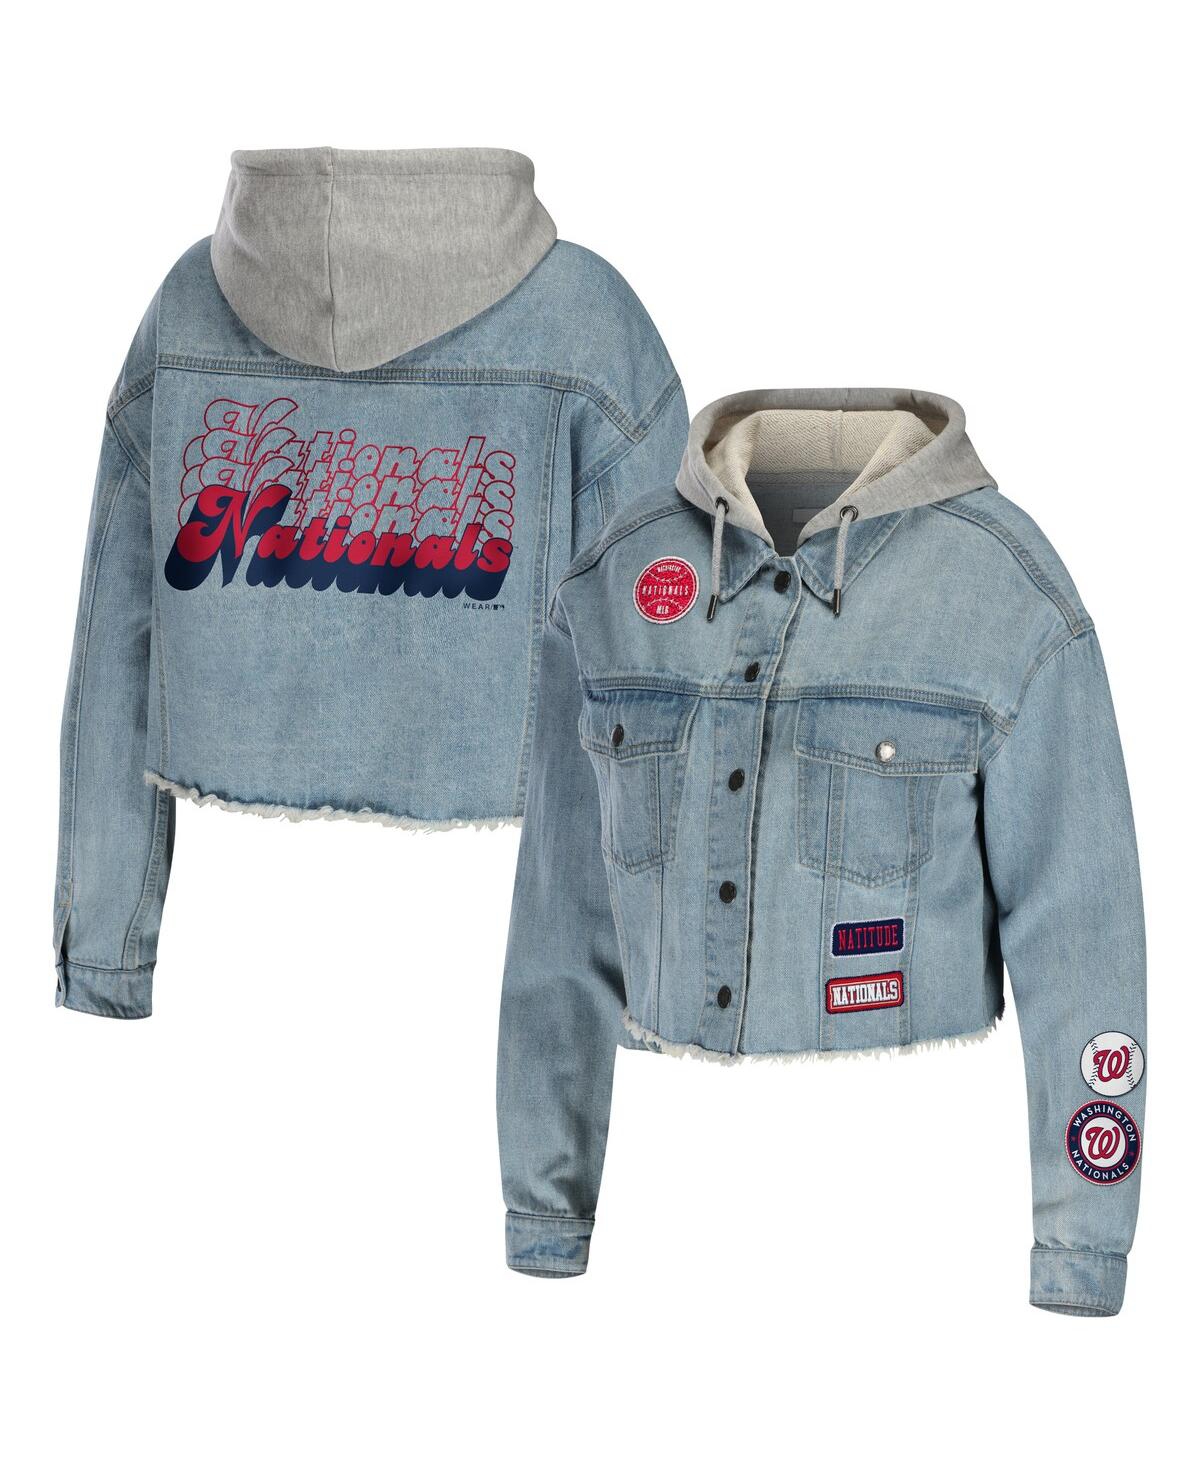 Shop Wear By Erin Andrews Women's  Washington Nationals Hooded Full-button Denim Jacket